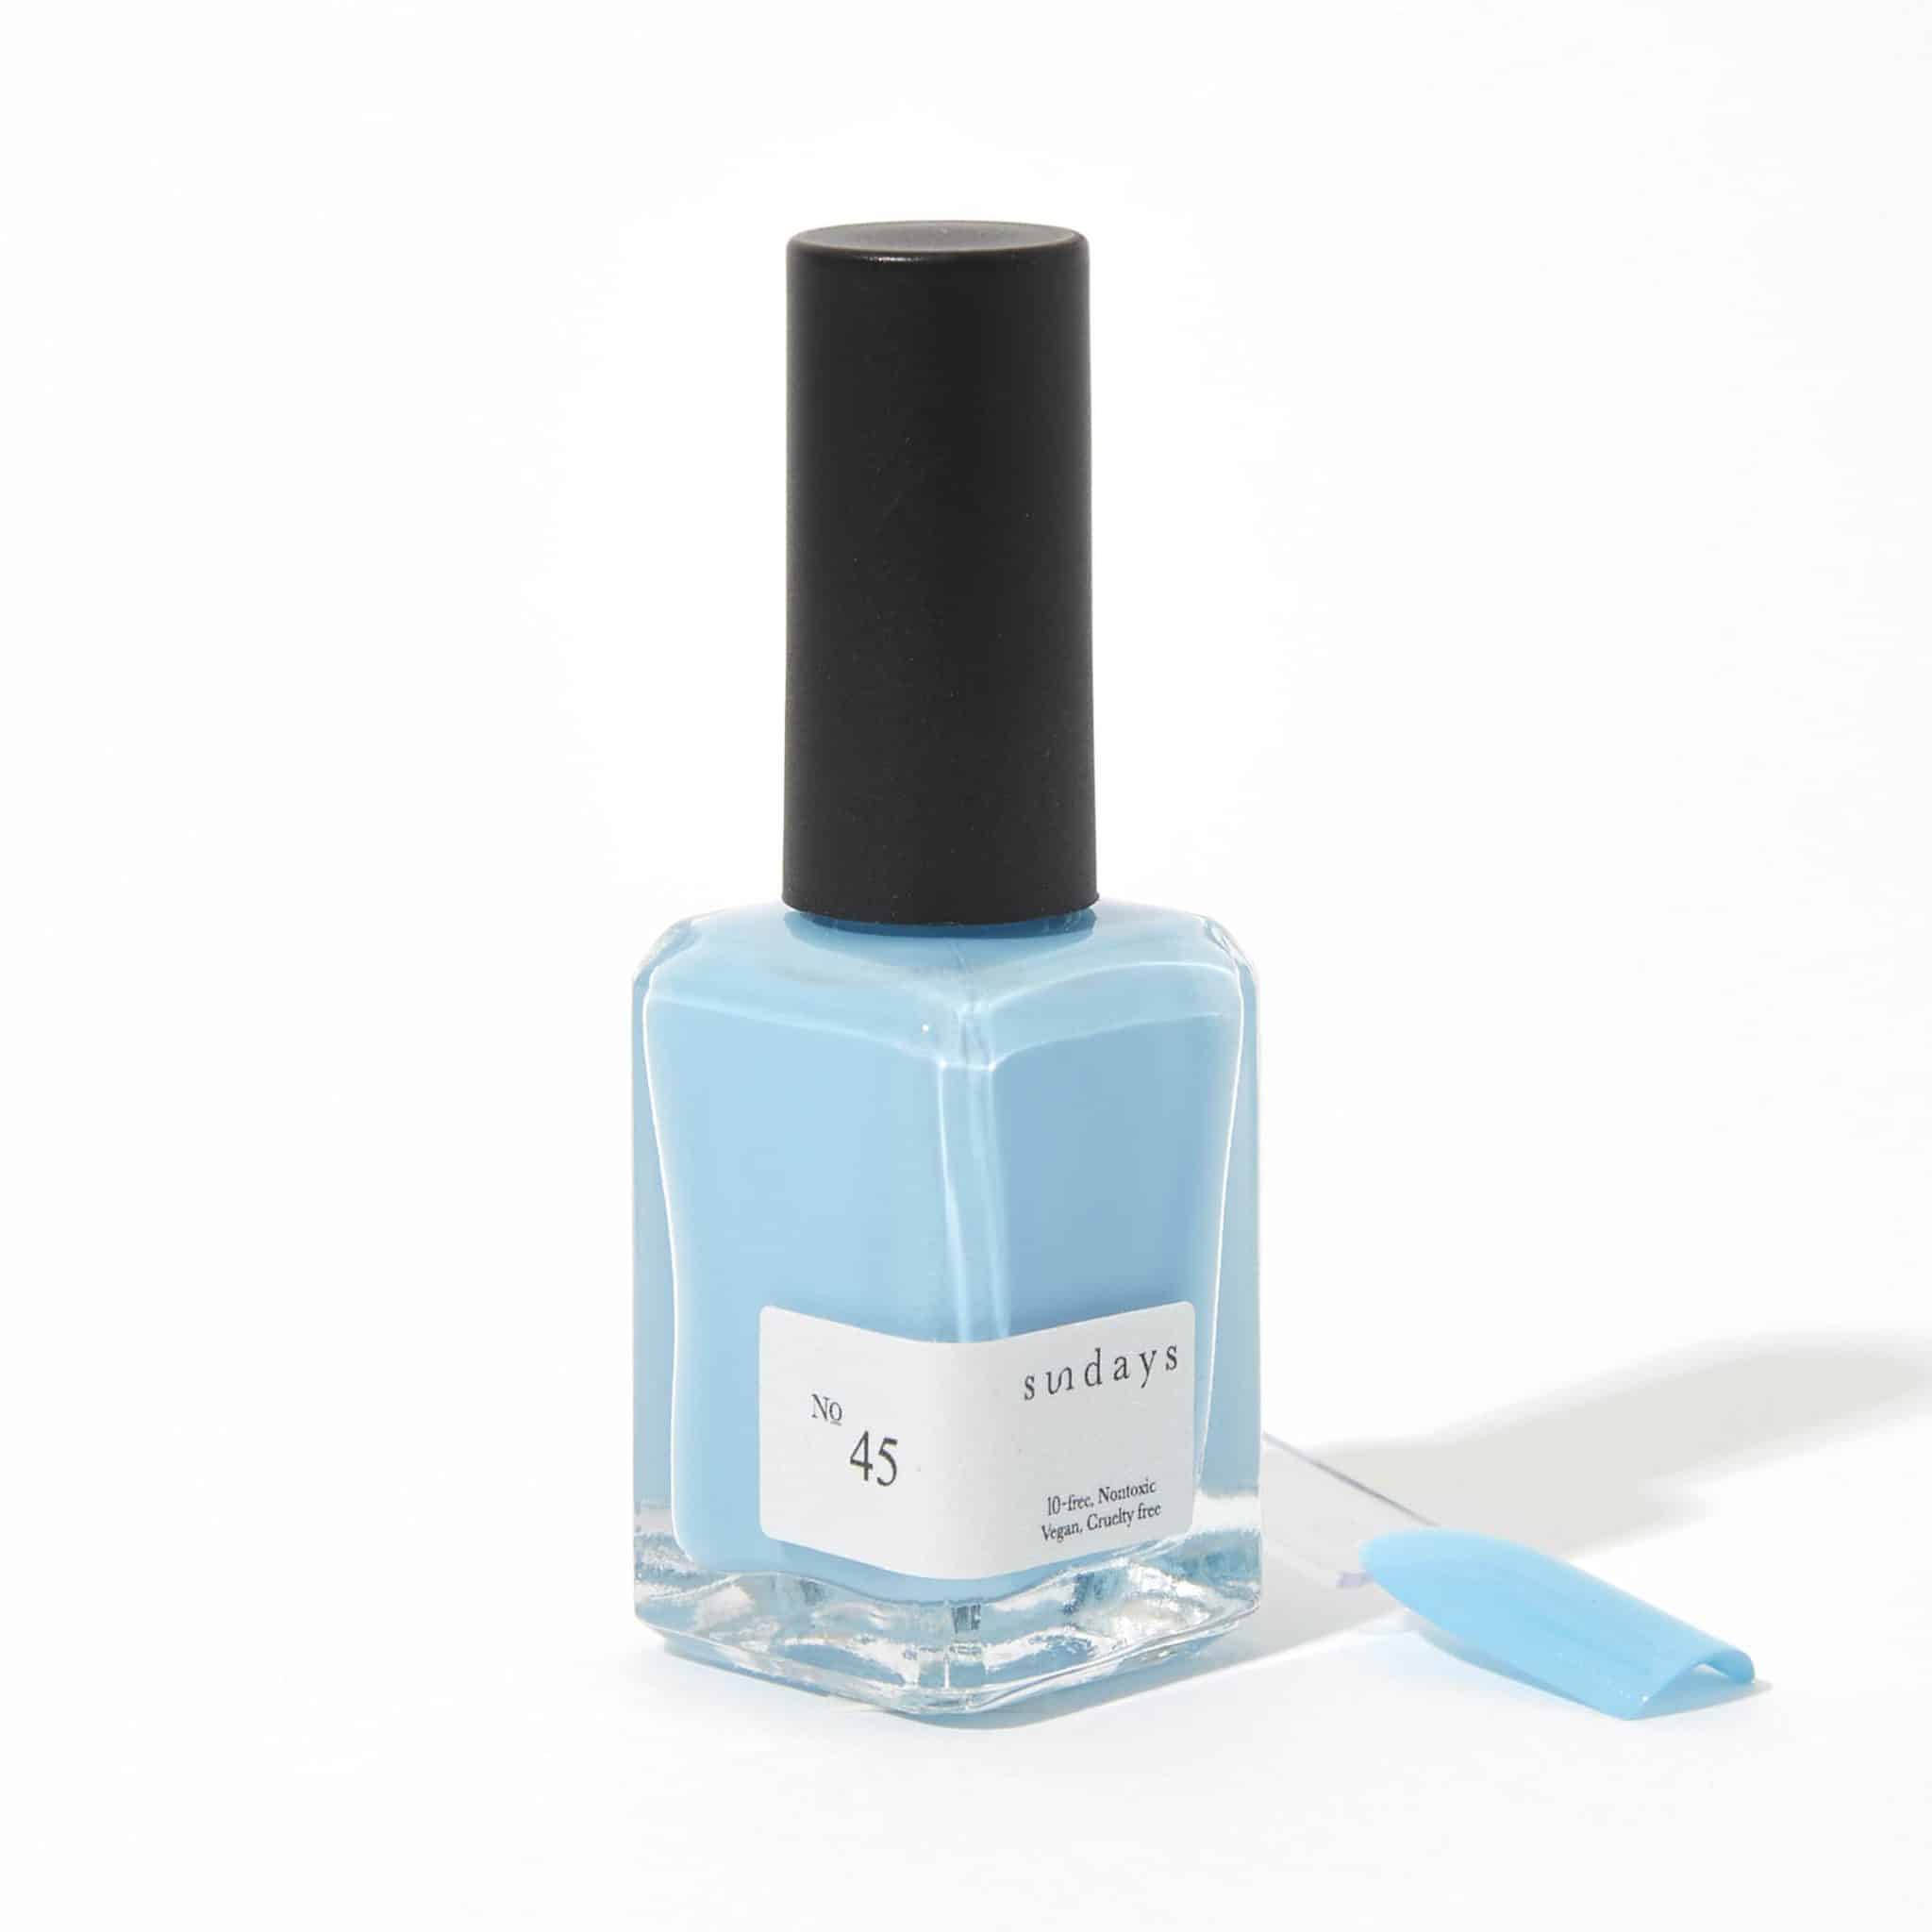 Non-toxic nail polish in sky blue